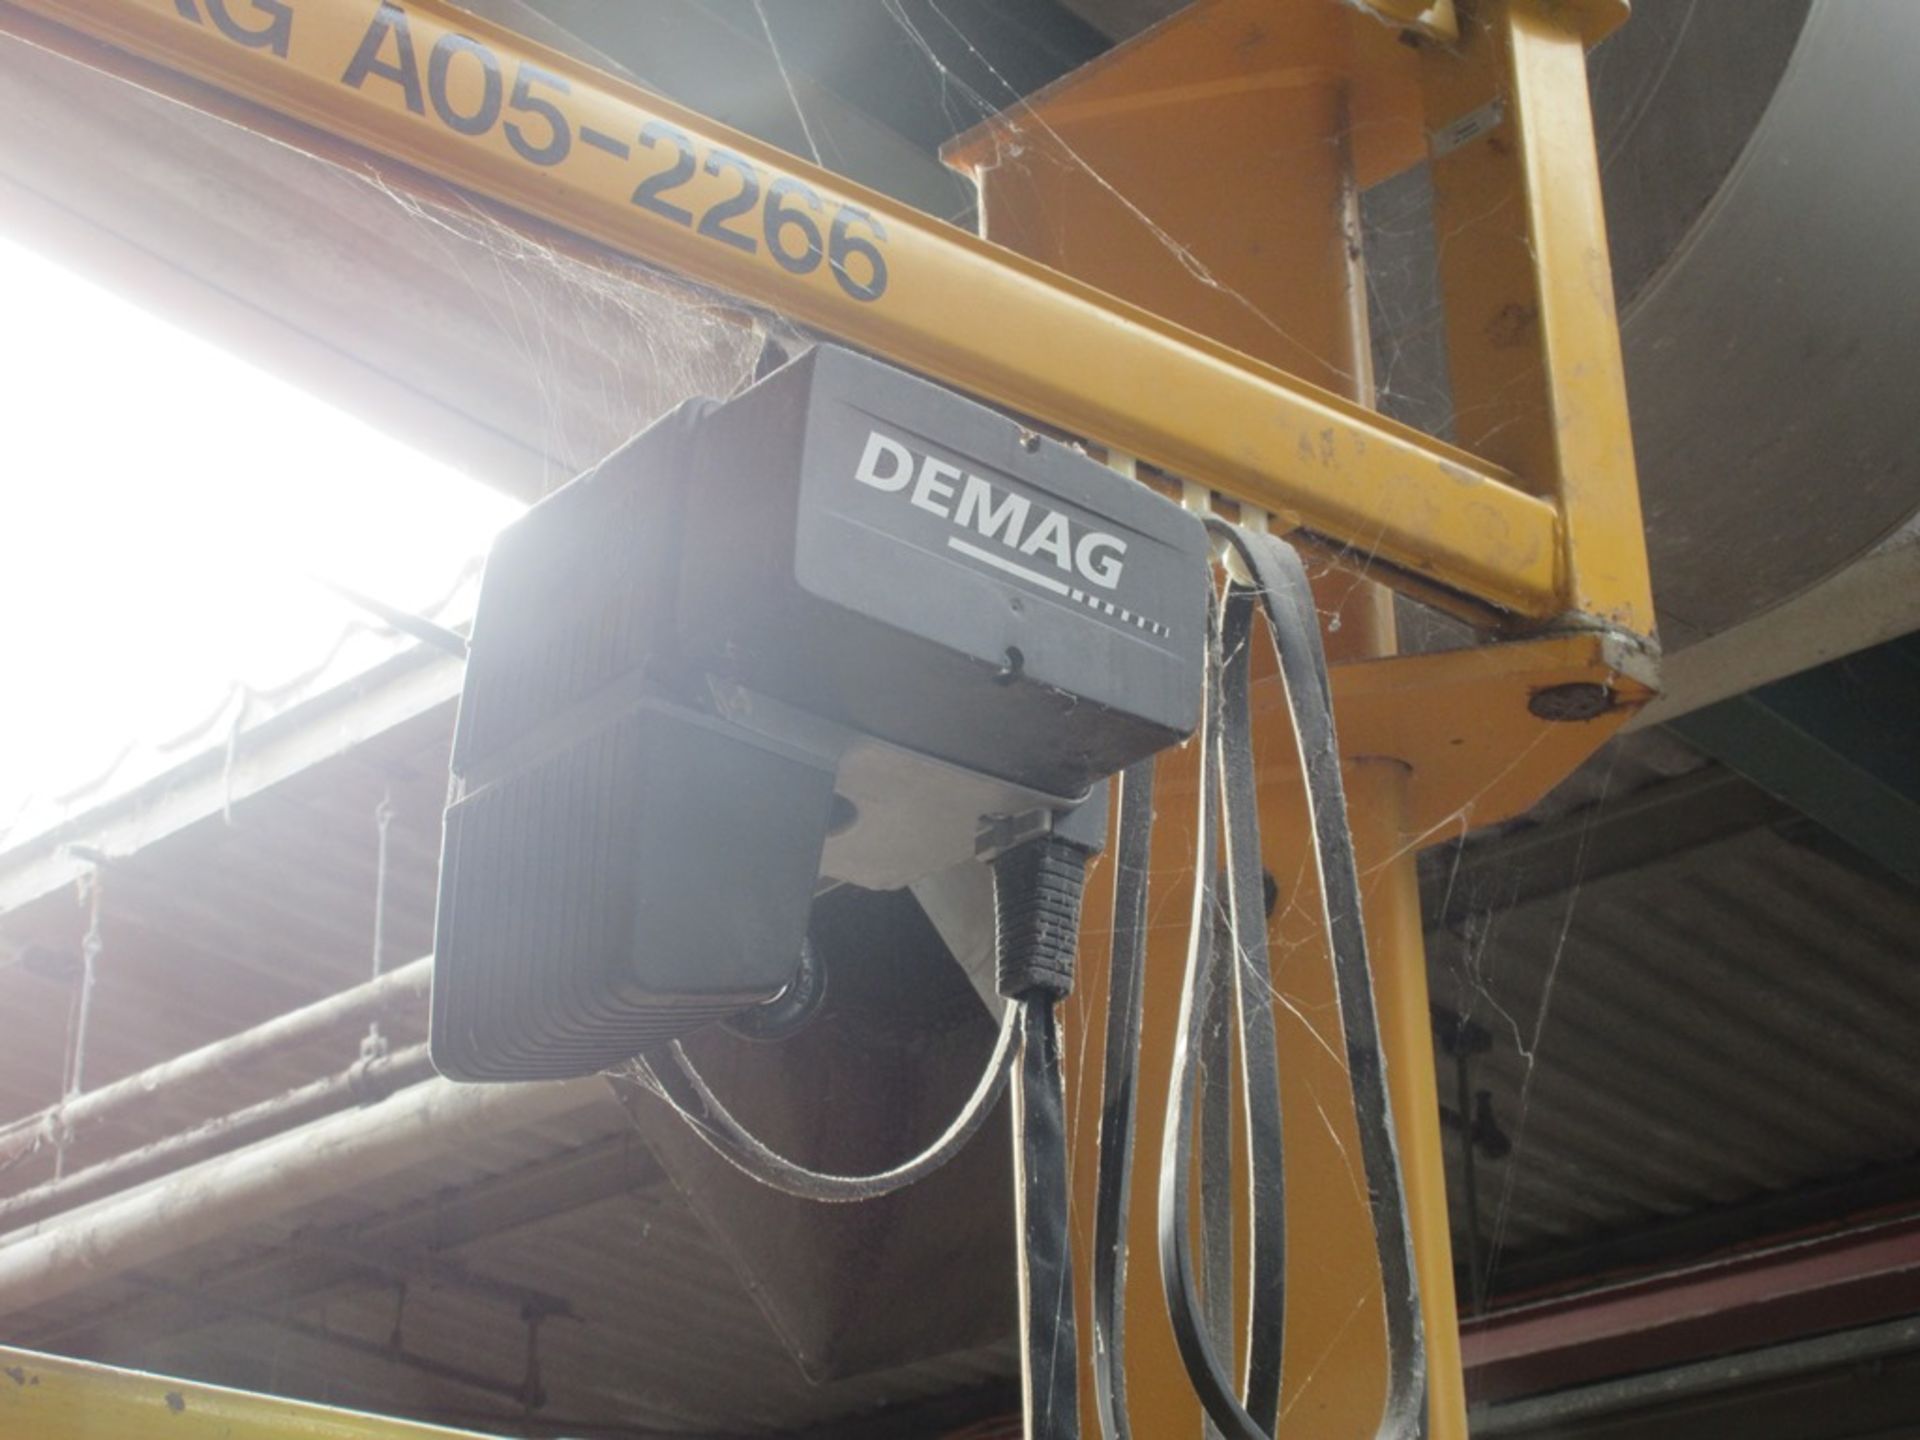 Able pillar jib crane, serial no. A05-2266, SWL 125kg, span approx. 3m, Demag chain hoist, pendant - Image 3 of 5